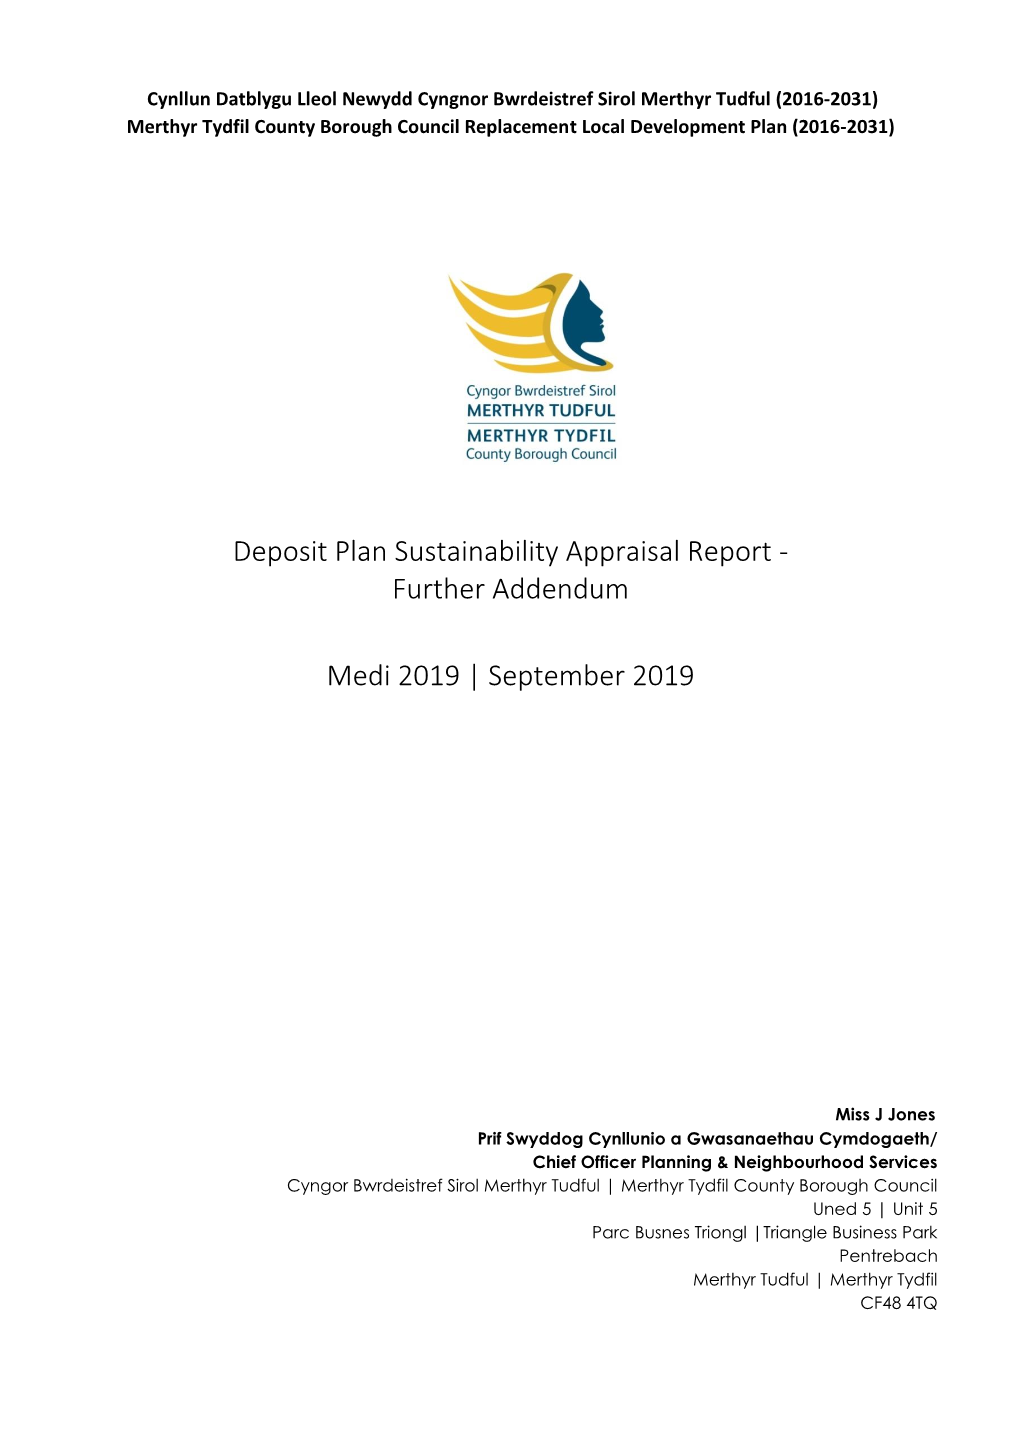 Deposit Plan Sustainability Appraisal Report - Further Addendum